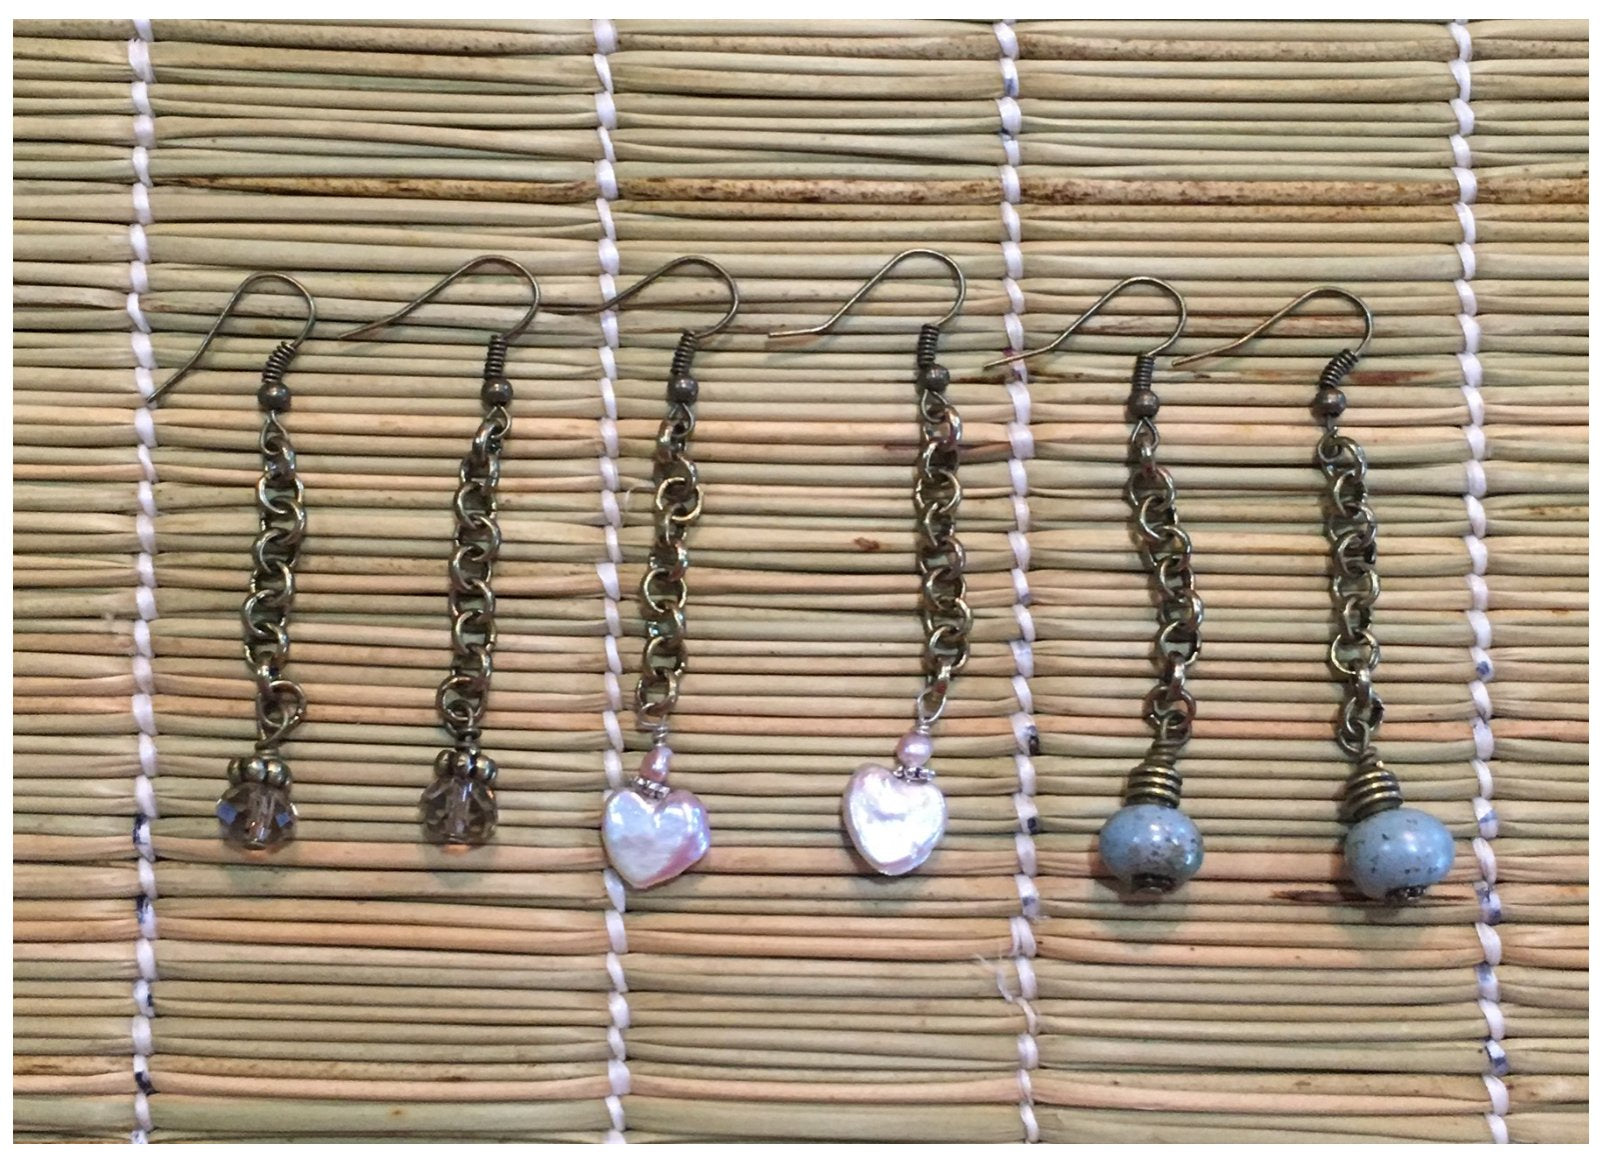 Copper Chain Earrings - Khutsala™ Artisans